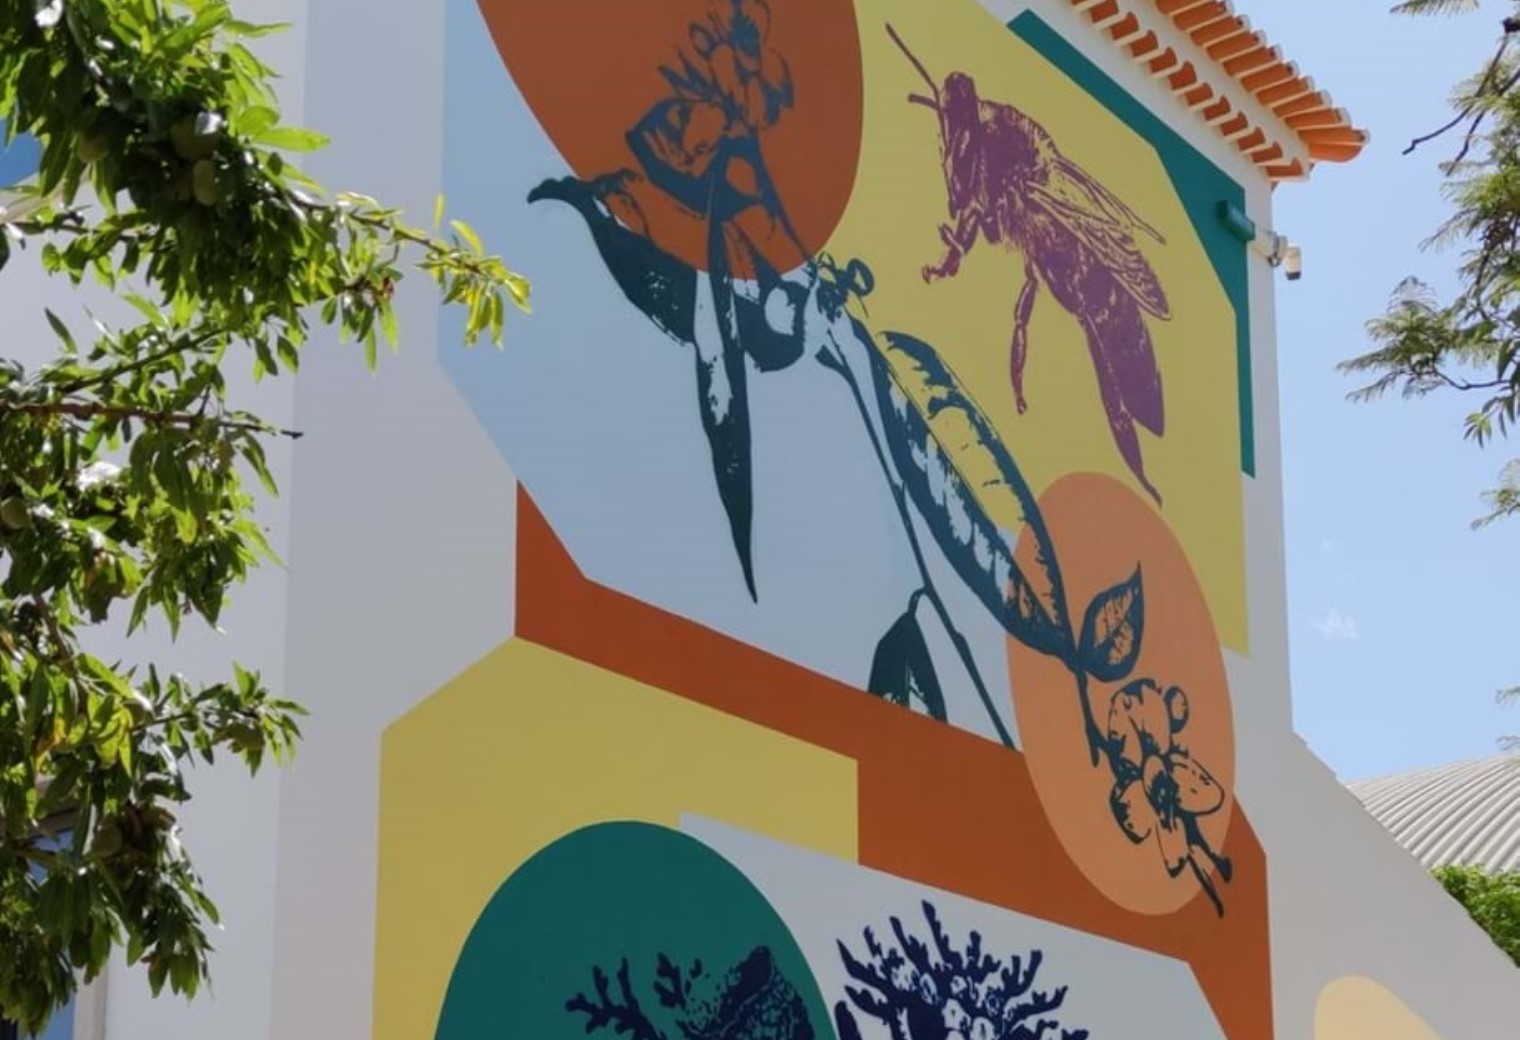 Mural EB1 Bairro Operário, with MadFildz and BIGOD